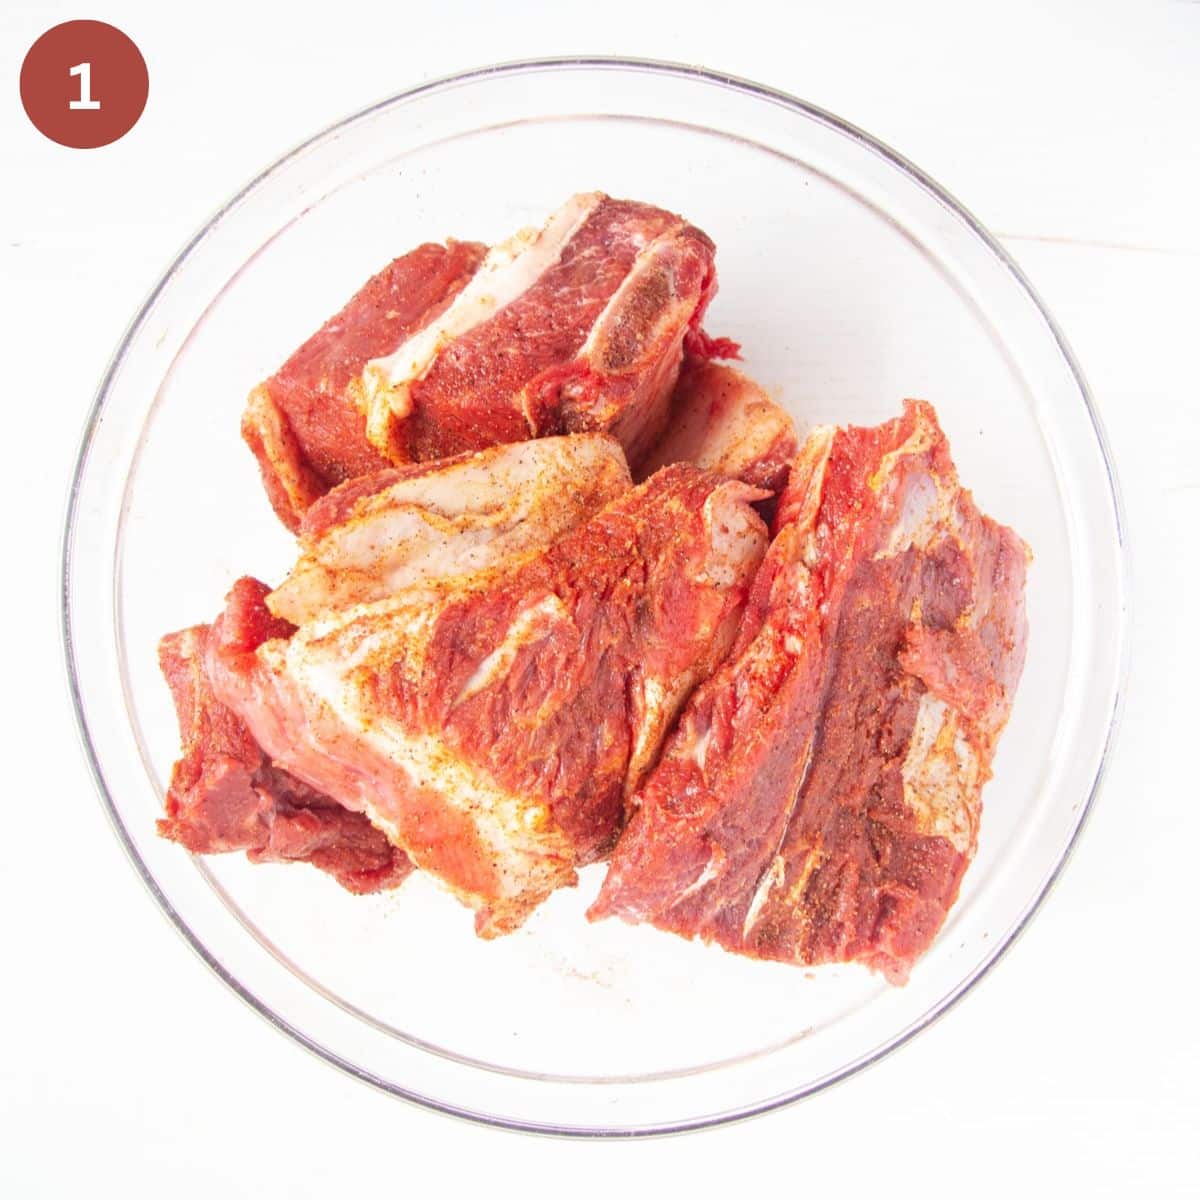 seasoned beef ribs in a bowl.